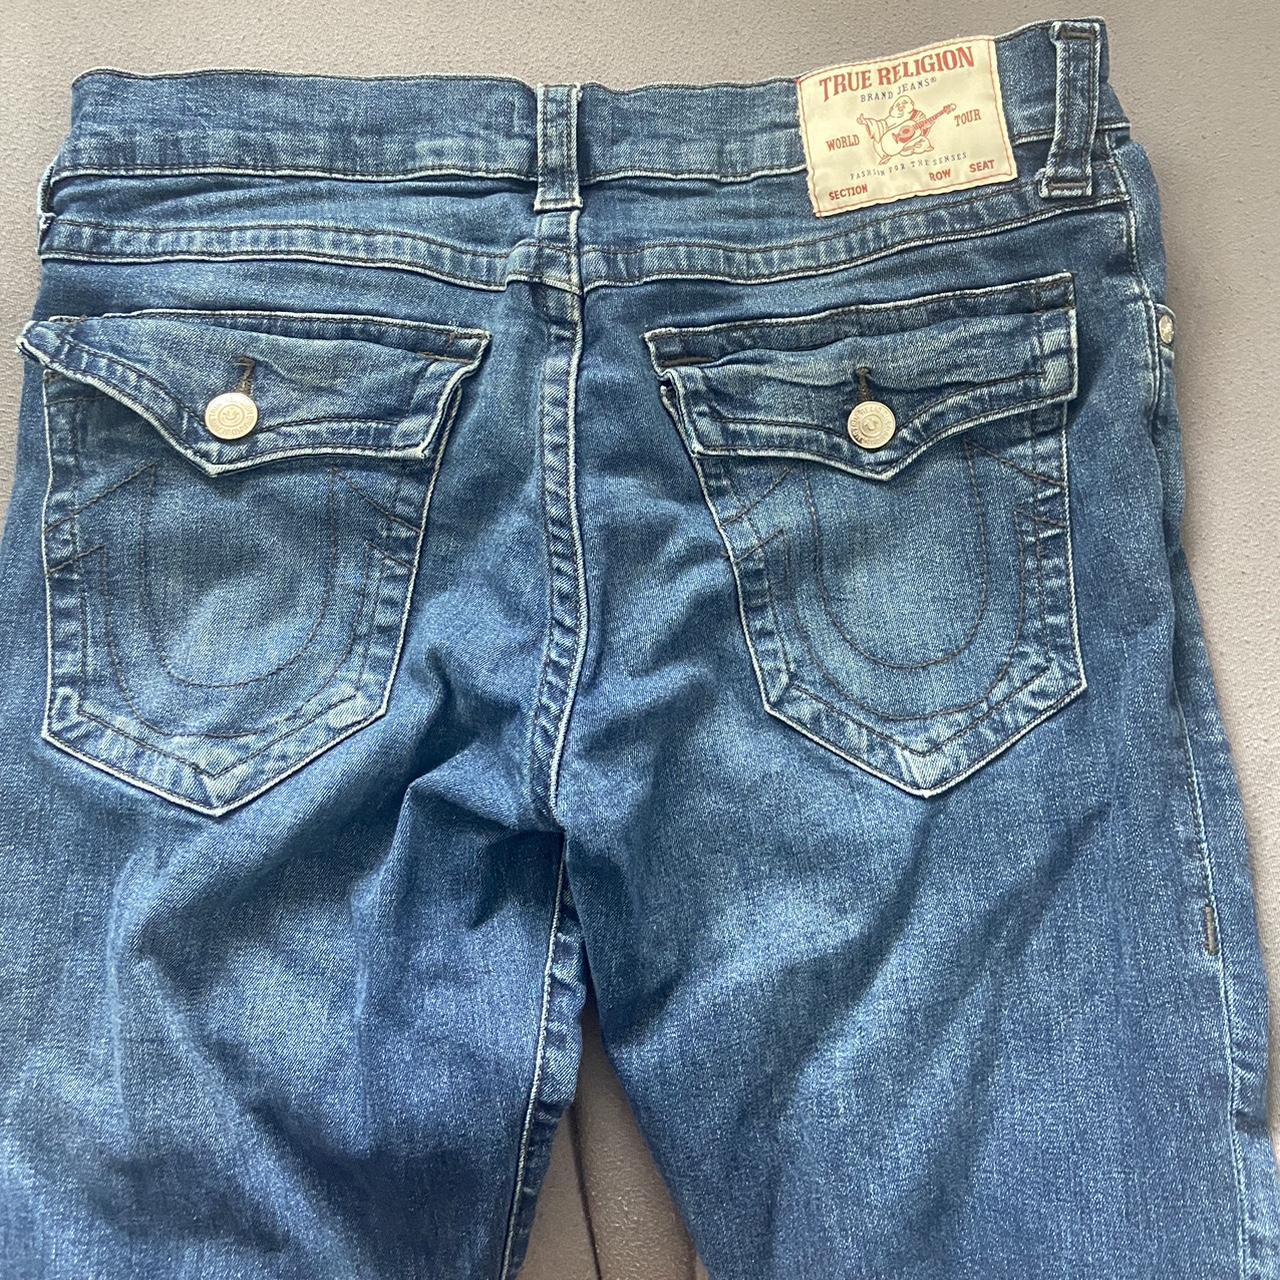 True religion Geno jeans Relaxed slim fit Waist... - Depop